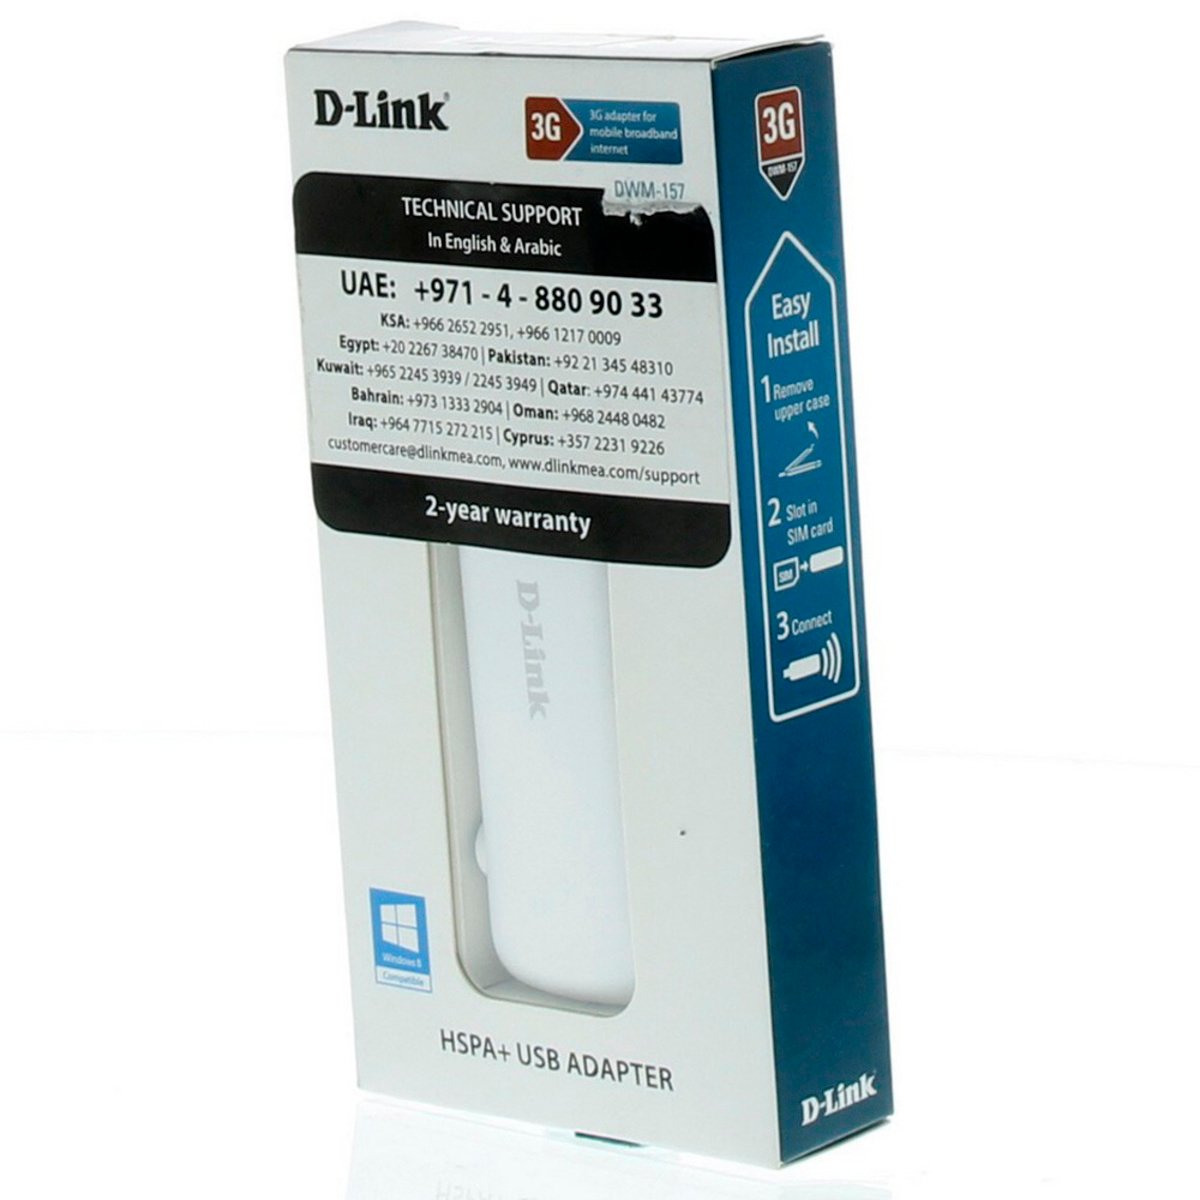 D-link 3G Dongle DWM-157 21Mbps